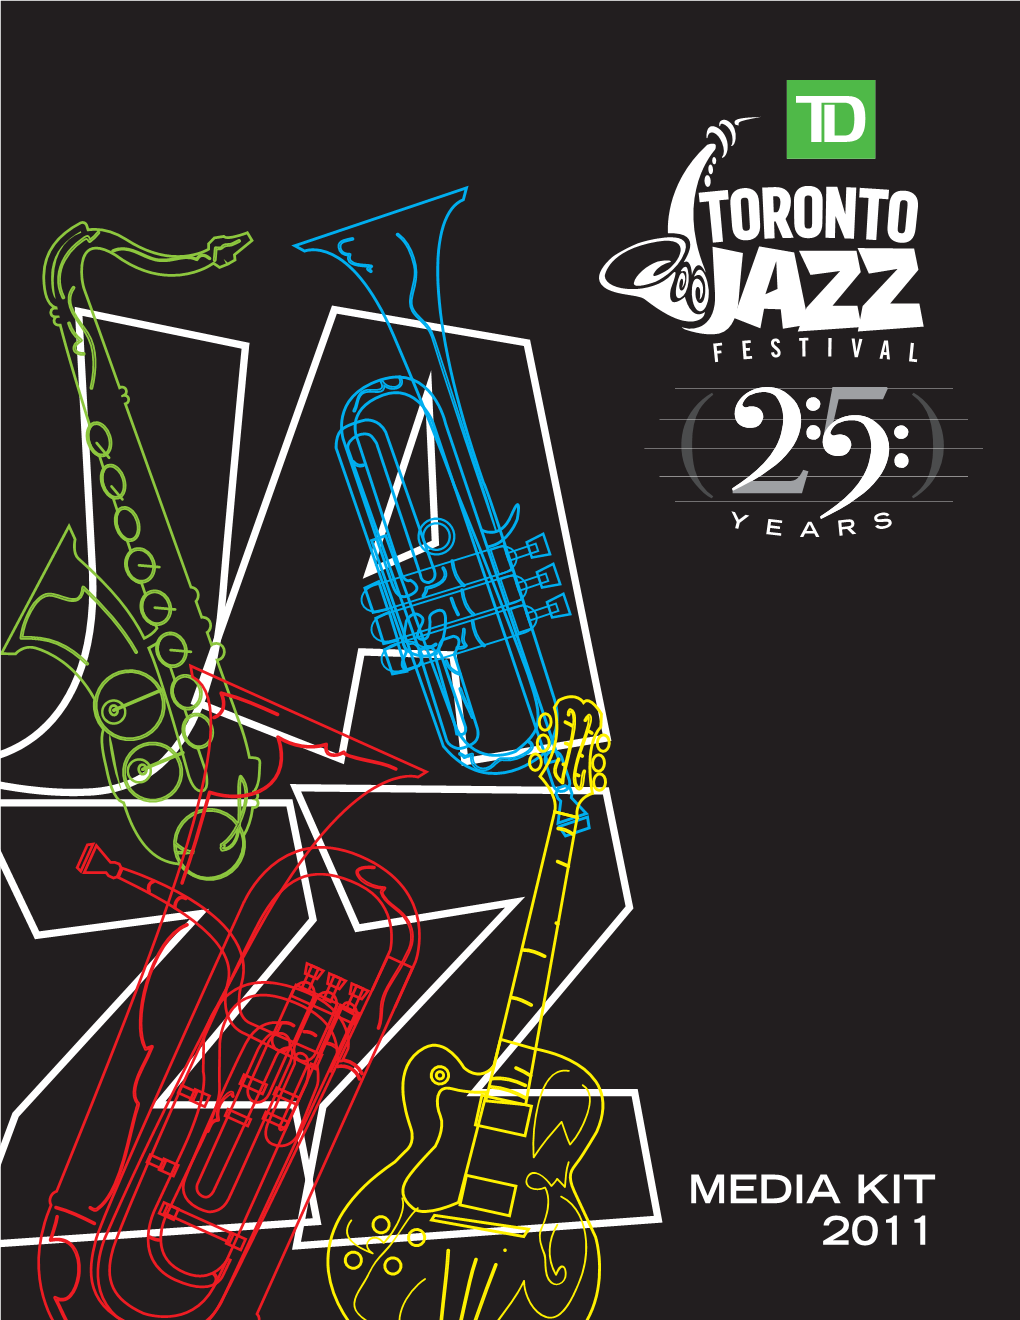 The TD Toronto Jazz Festival June 24 – July 3, 2011